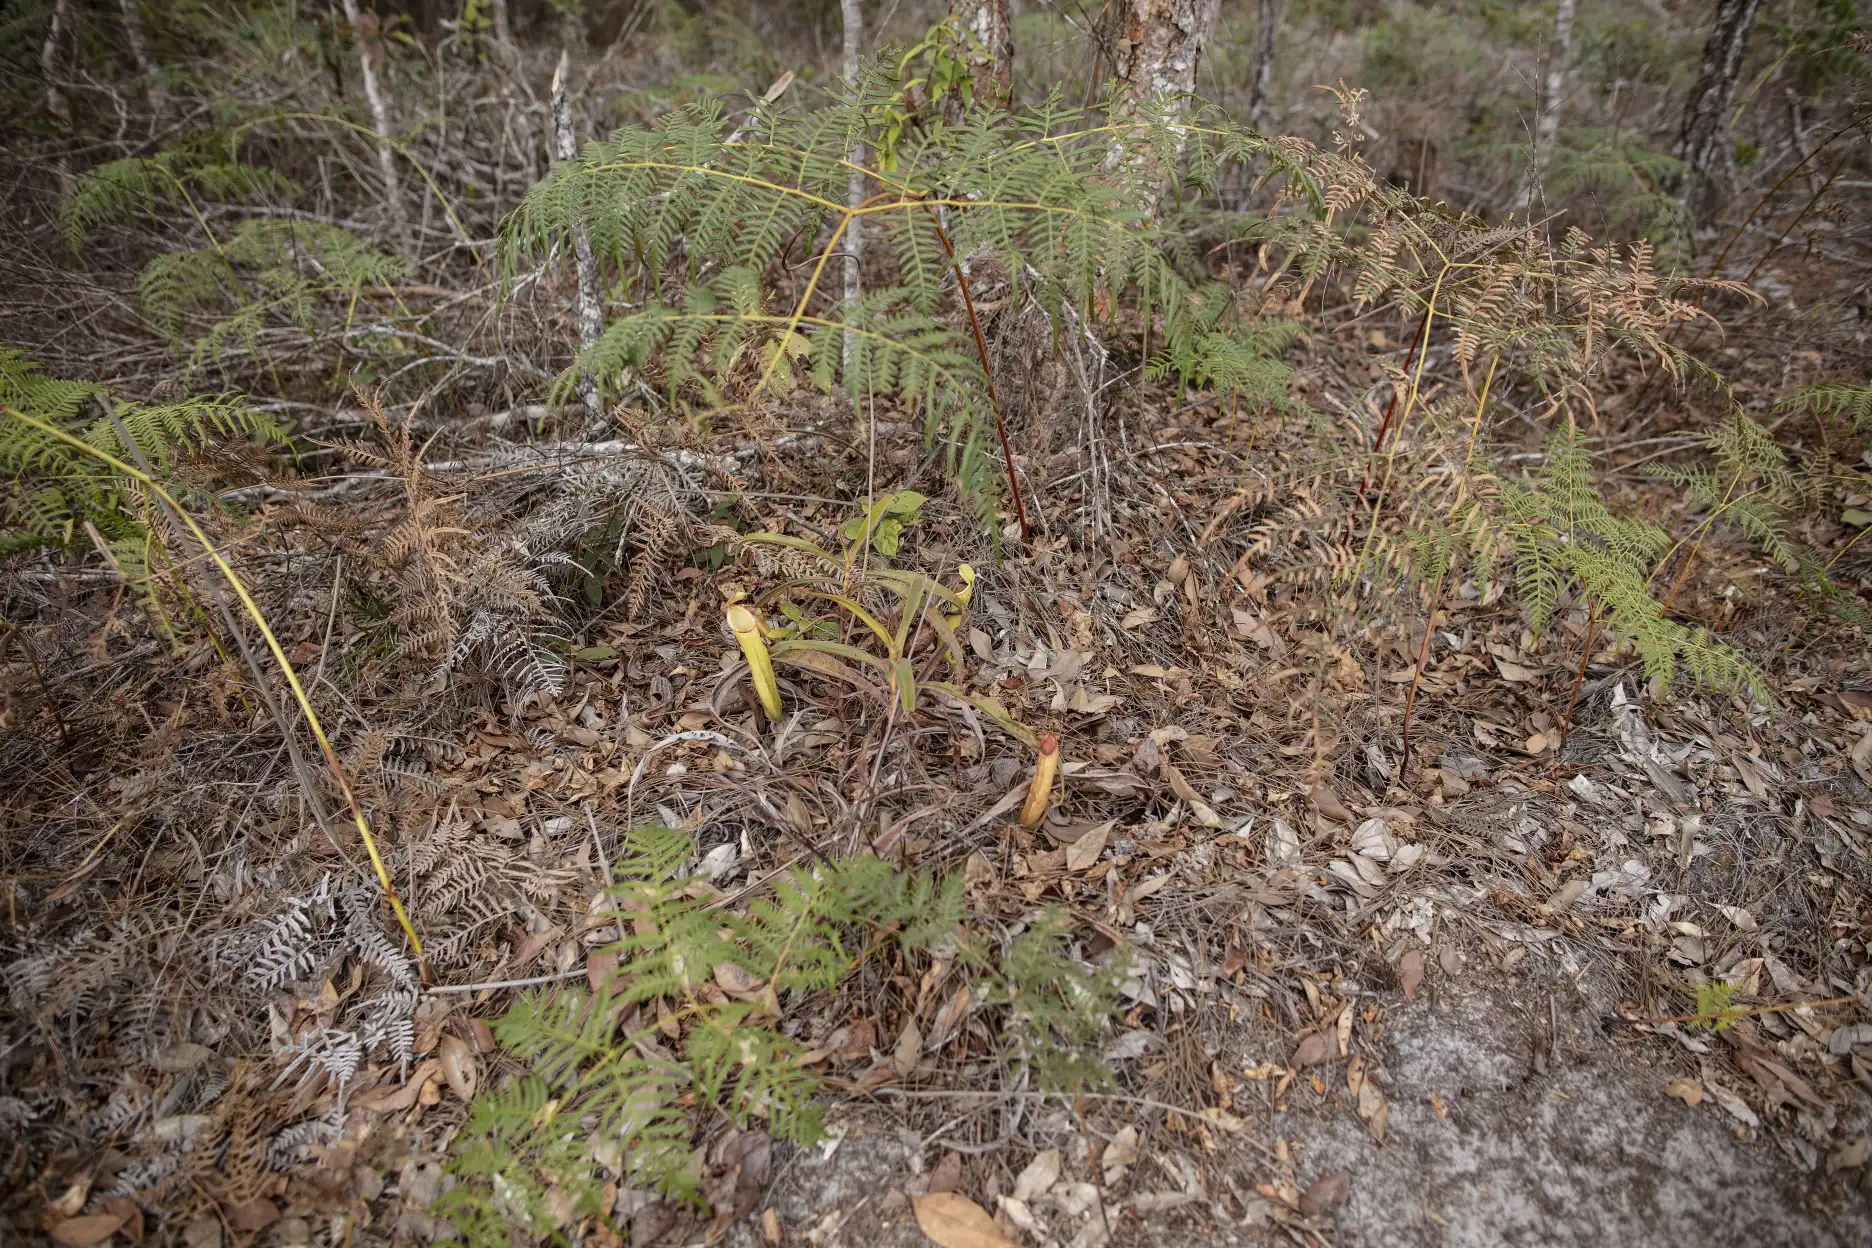 Nepenthes smilesii plant in habitat